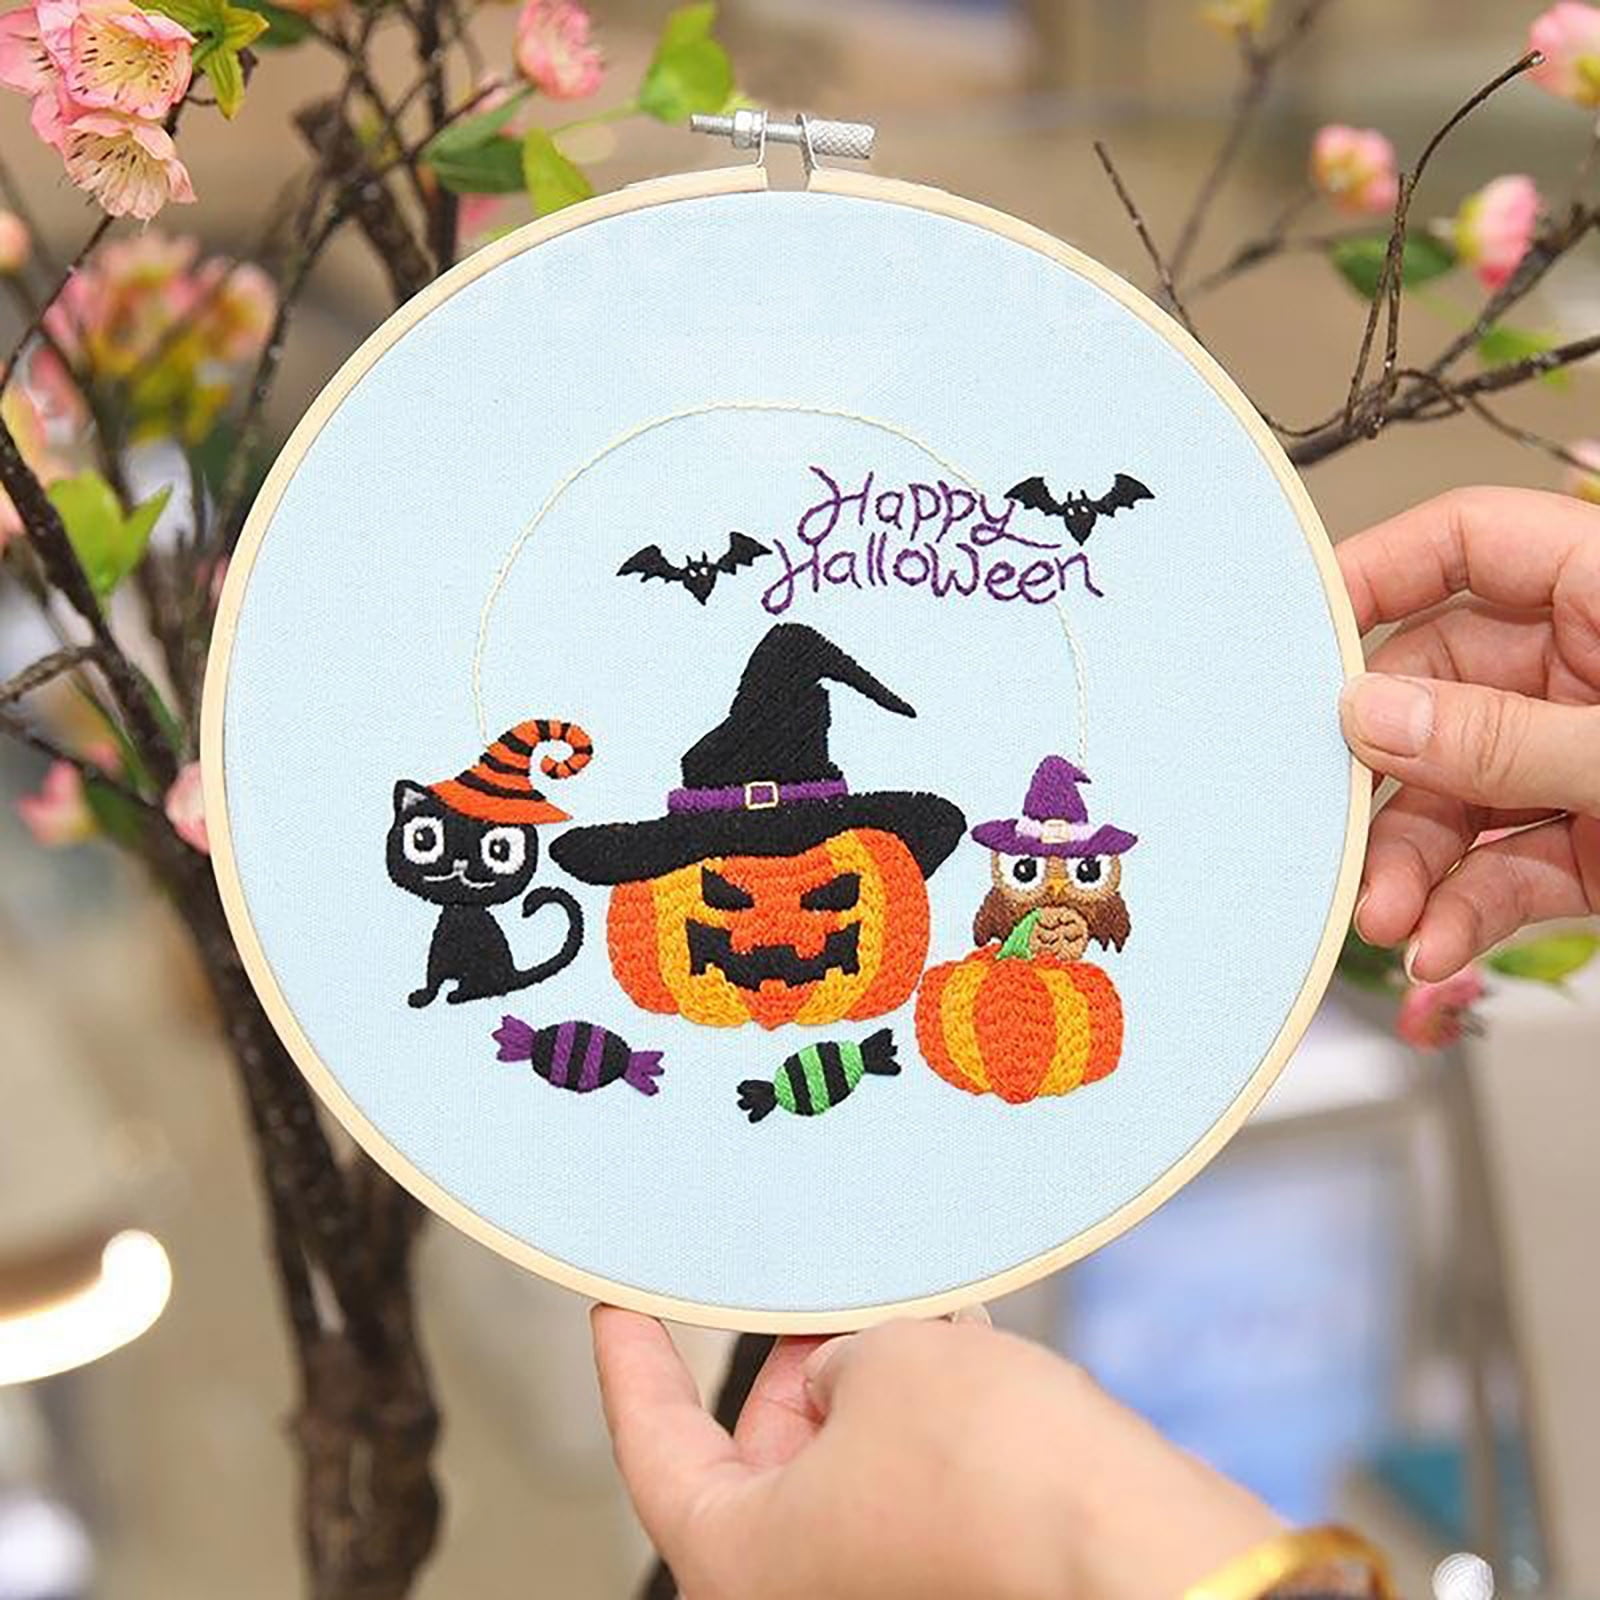 Vikakiooze Halloween Embroidery Kit Home Decor Halloween Gifts Craft Kit  English Manual, Halloween Decorations